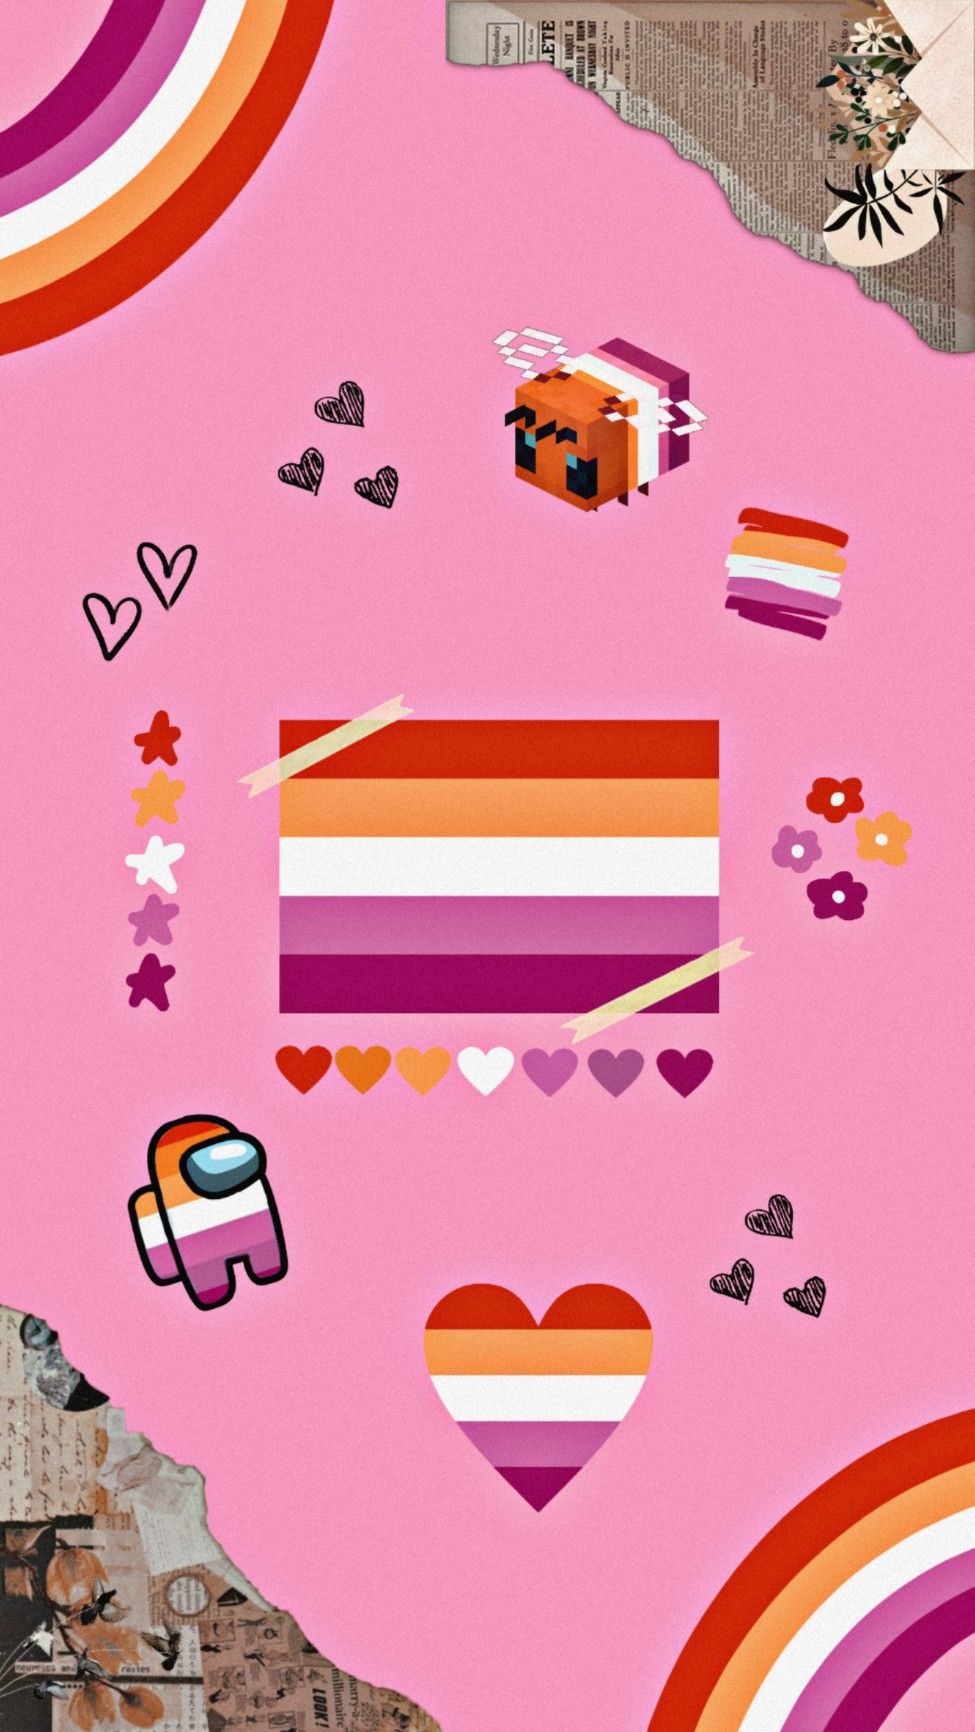 Lesbian pride wallpaper! 🏳️‍🌈